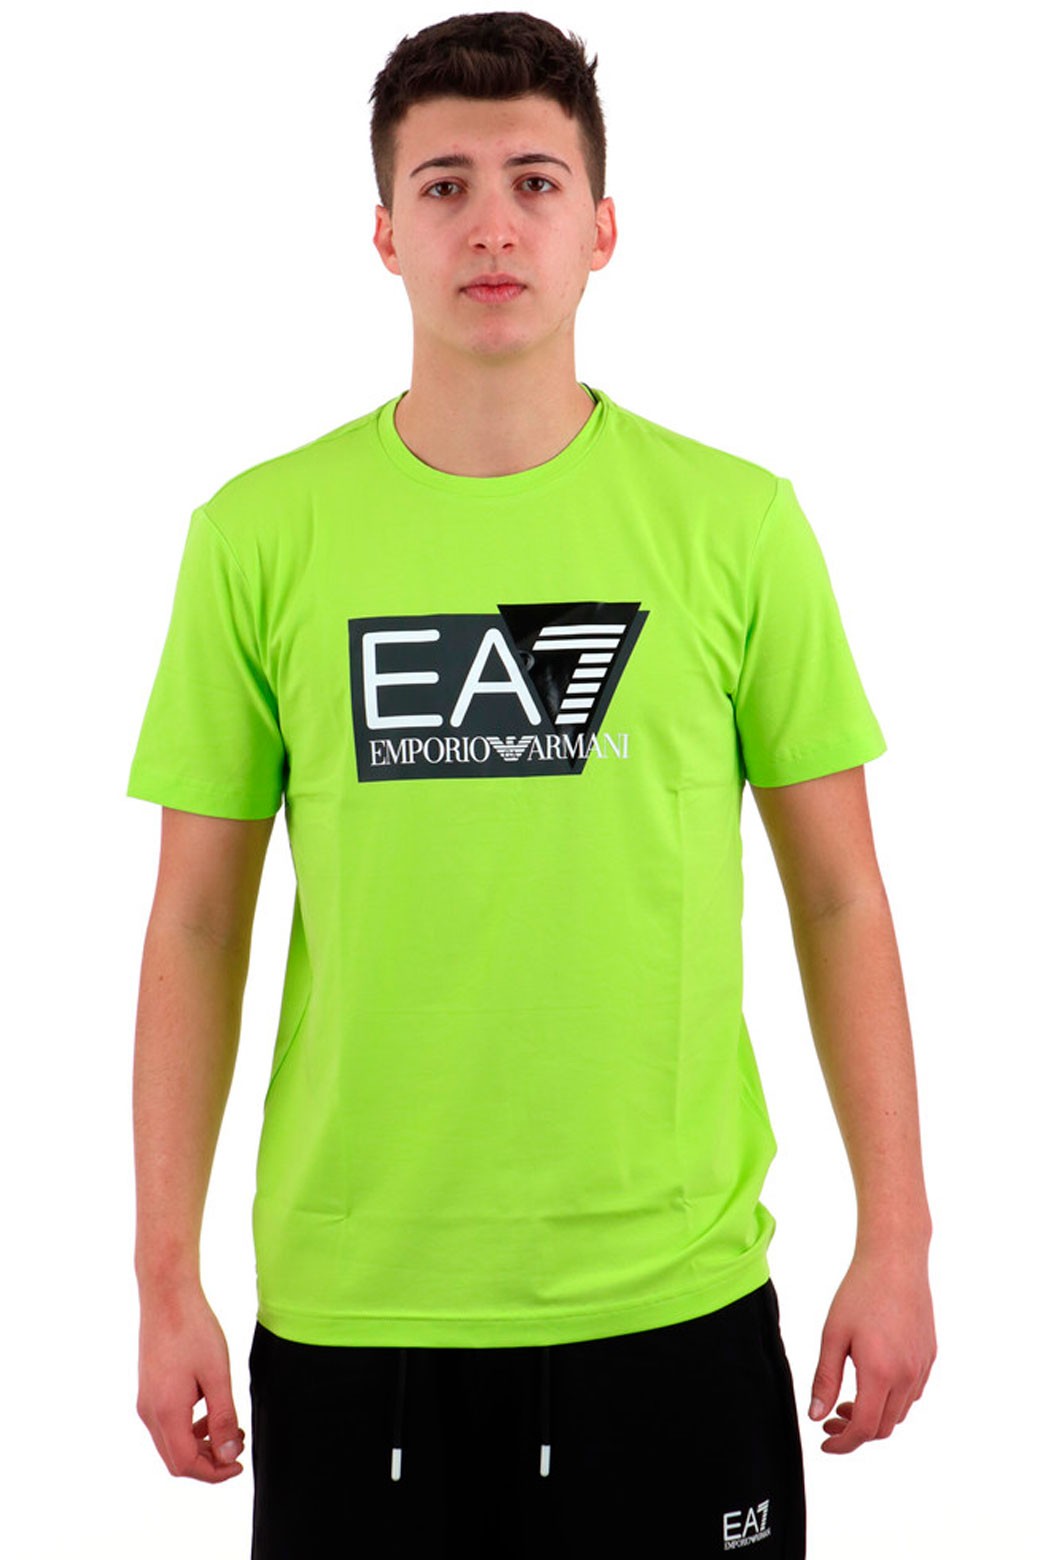 Camiseta Mod. 1 color Verde Limón